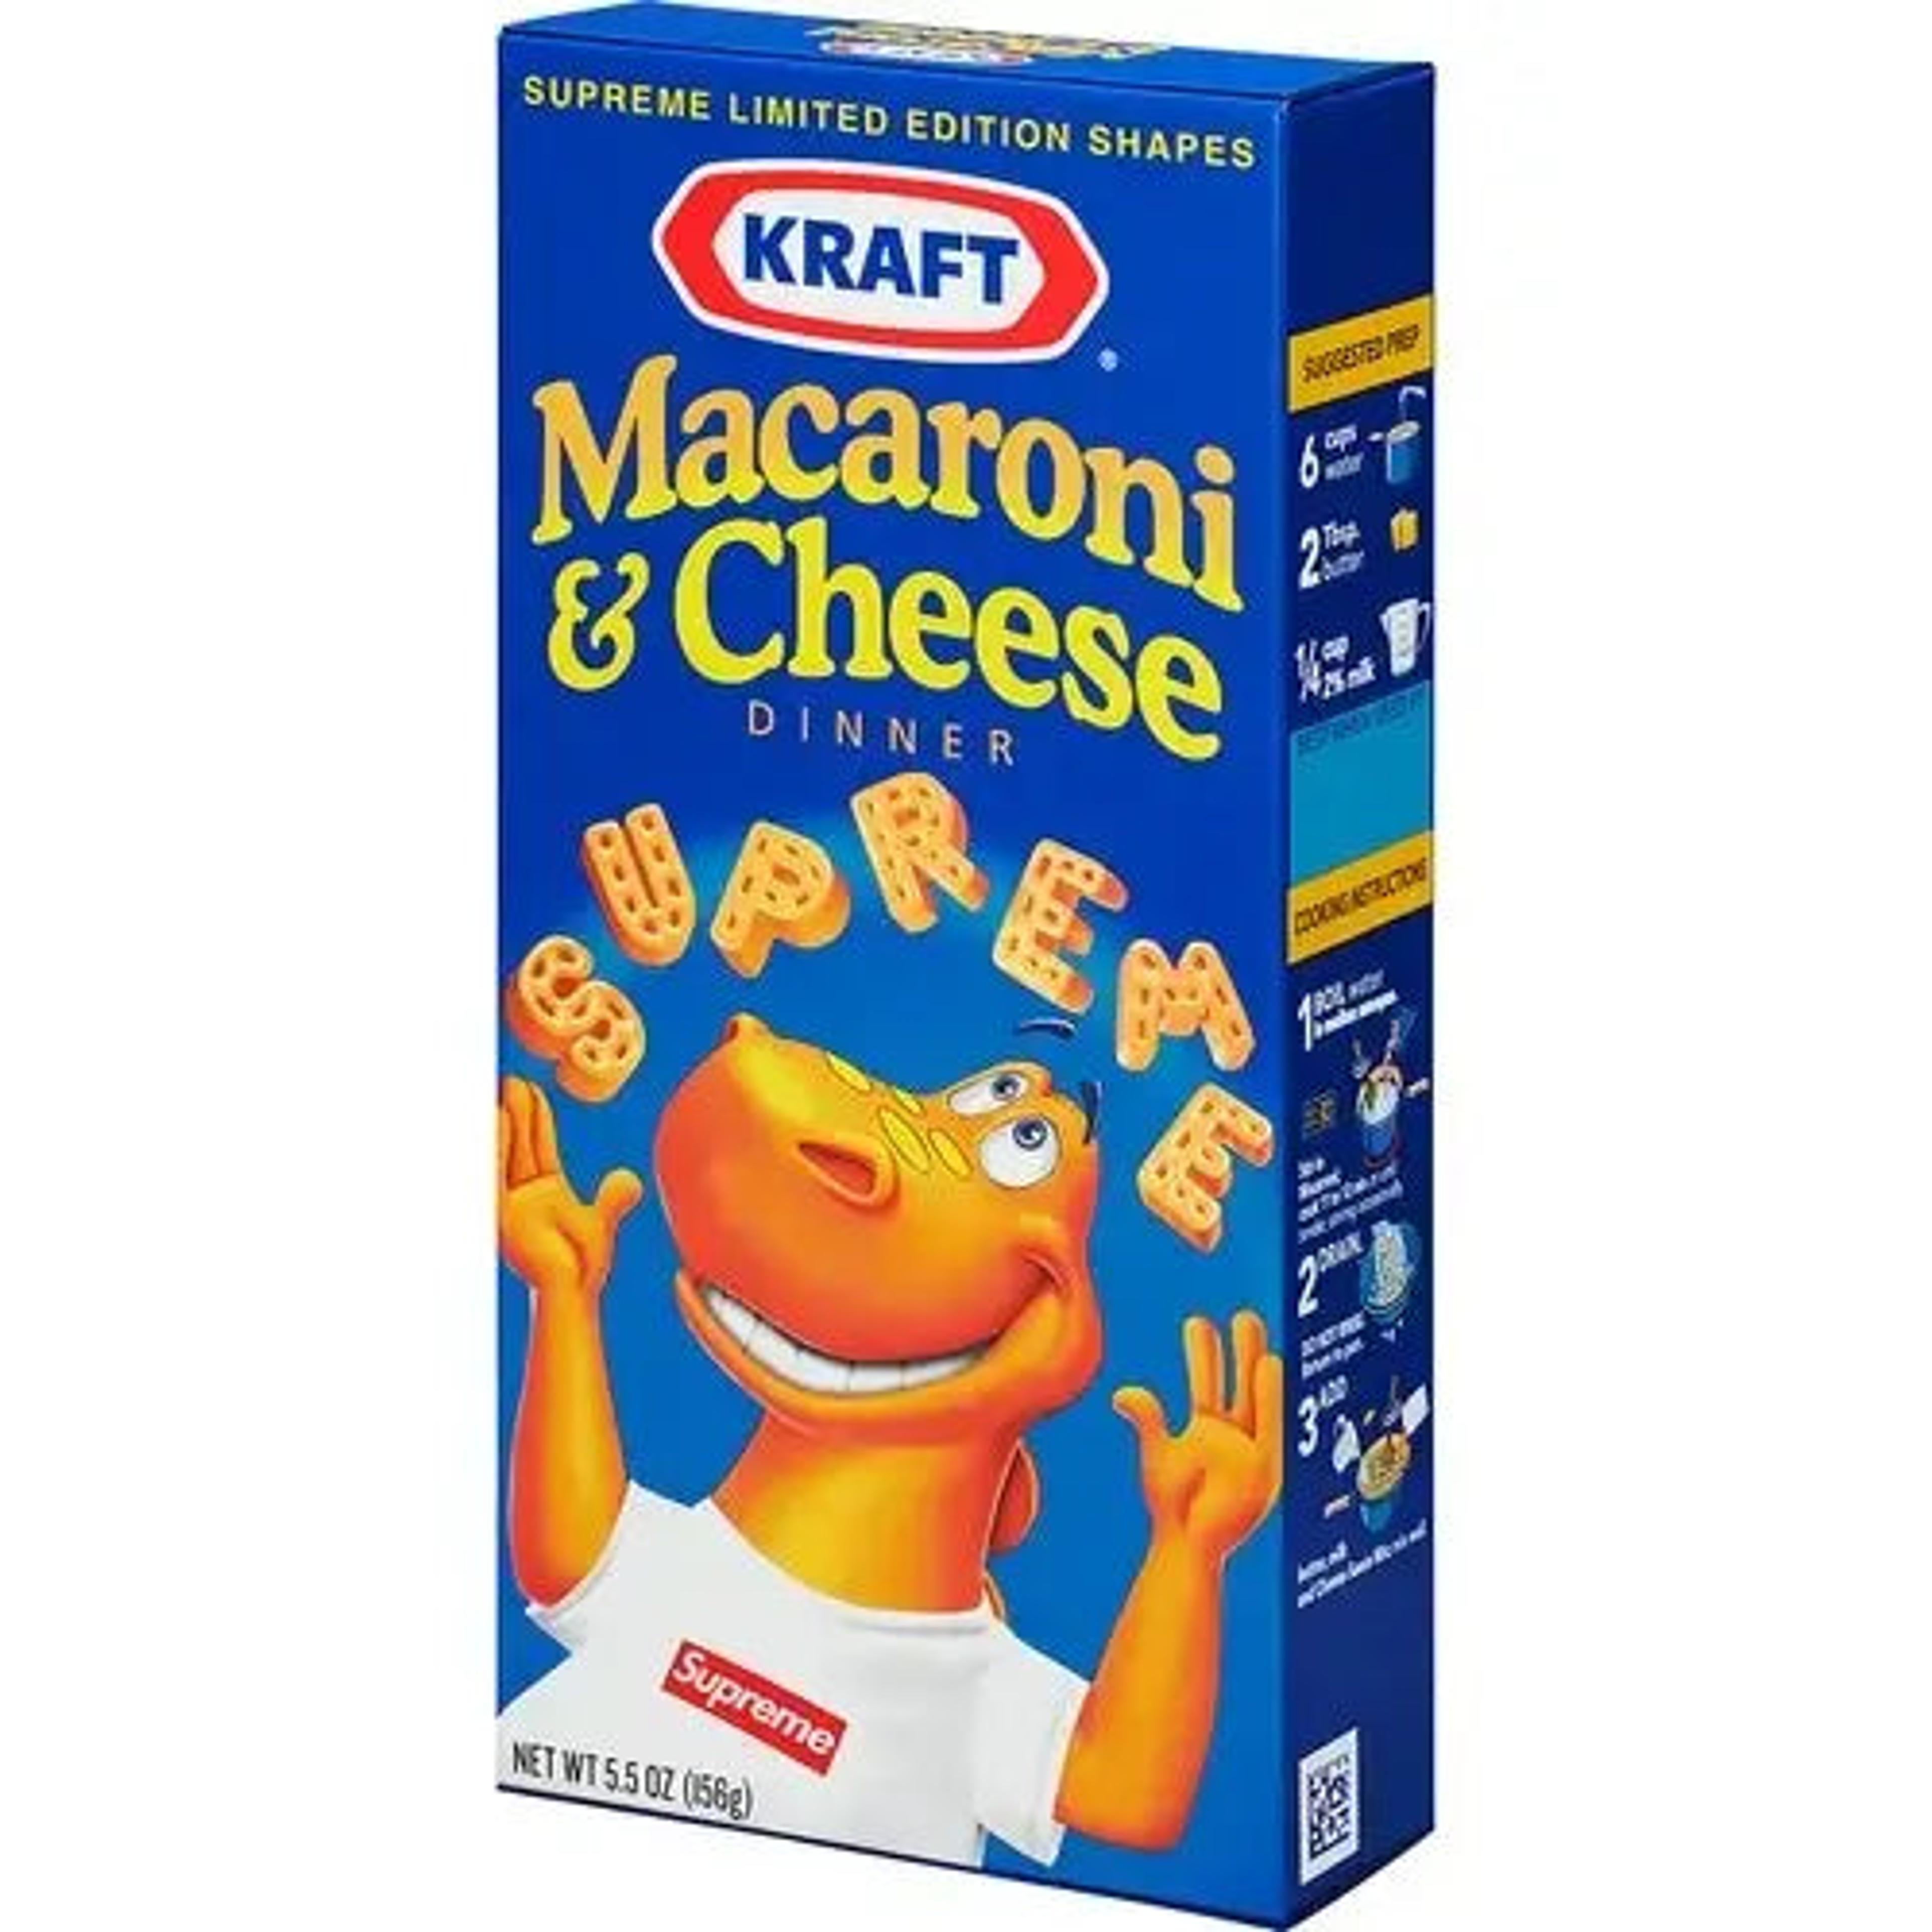 Supreme Kraft Macaroni & Cheese Box